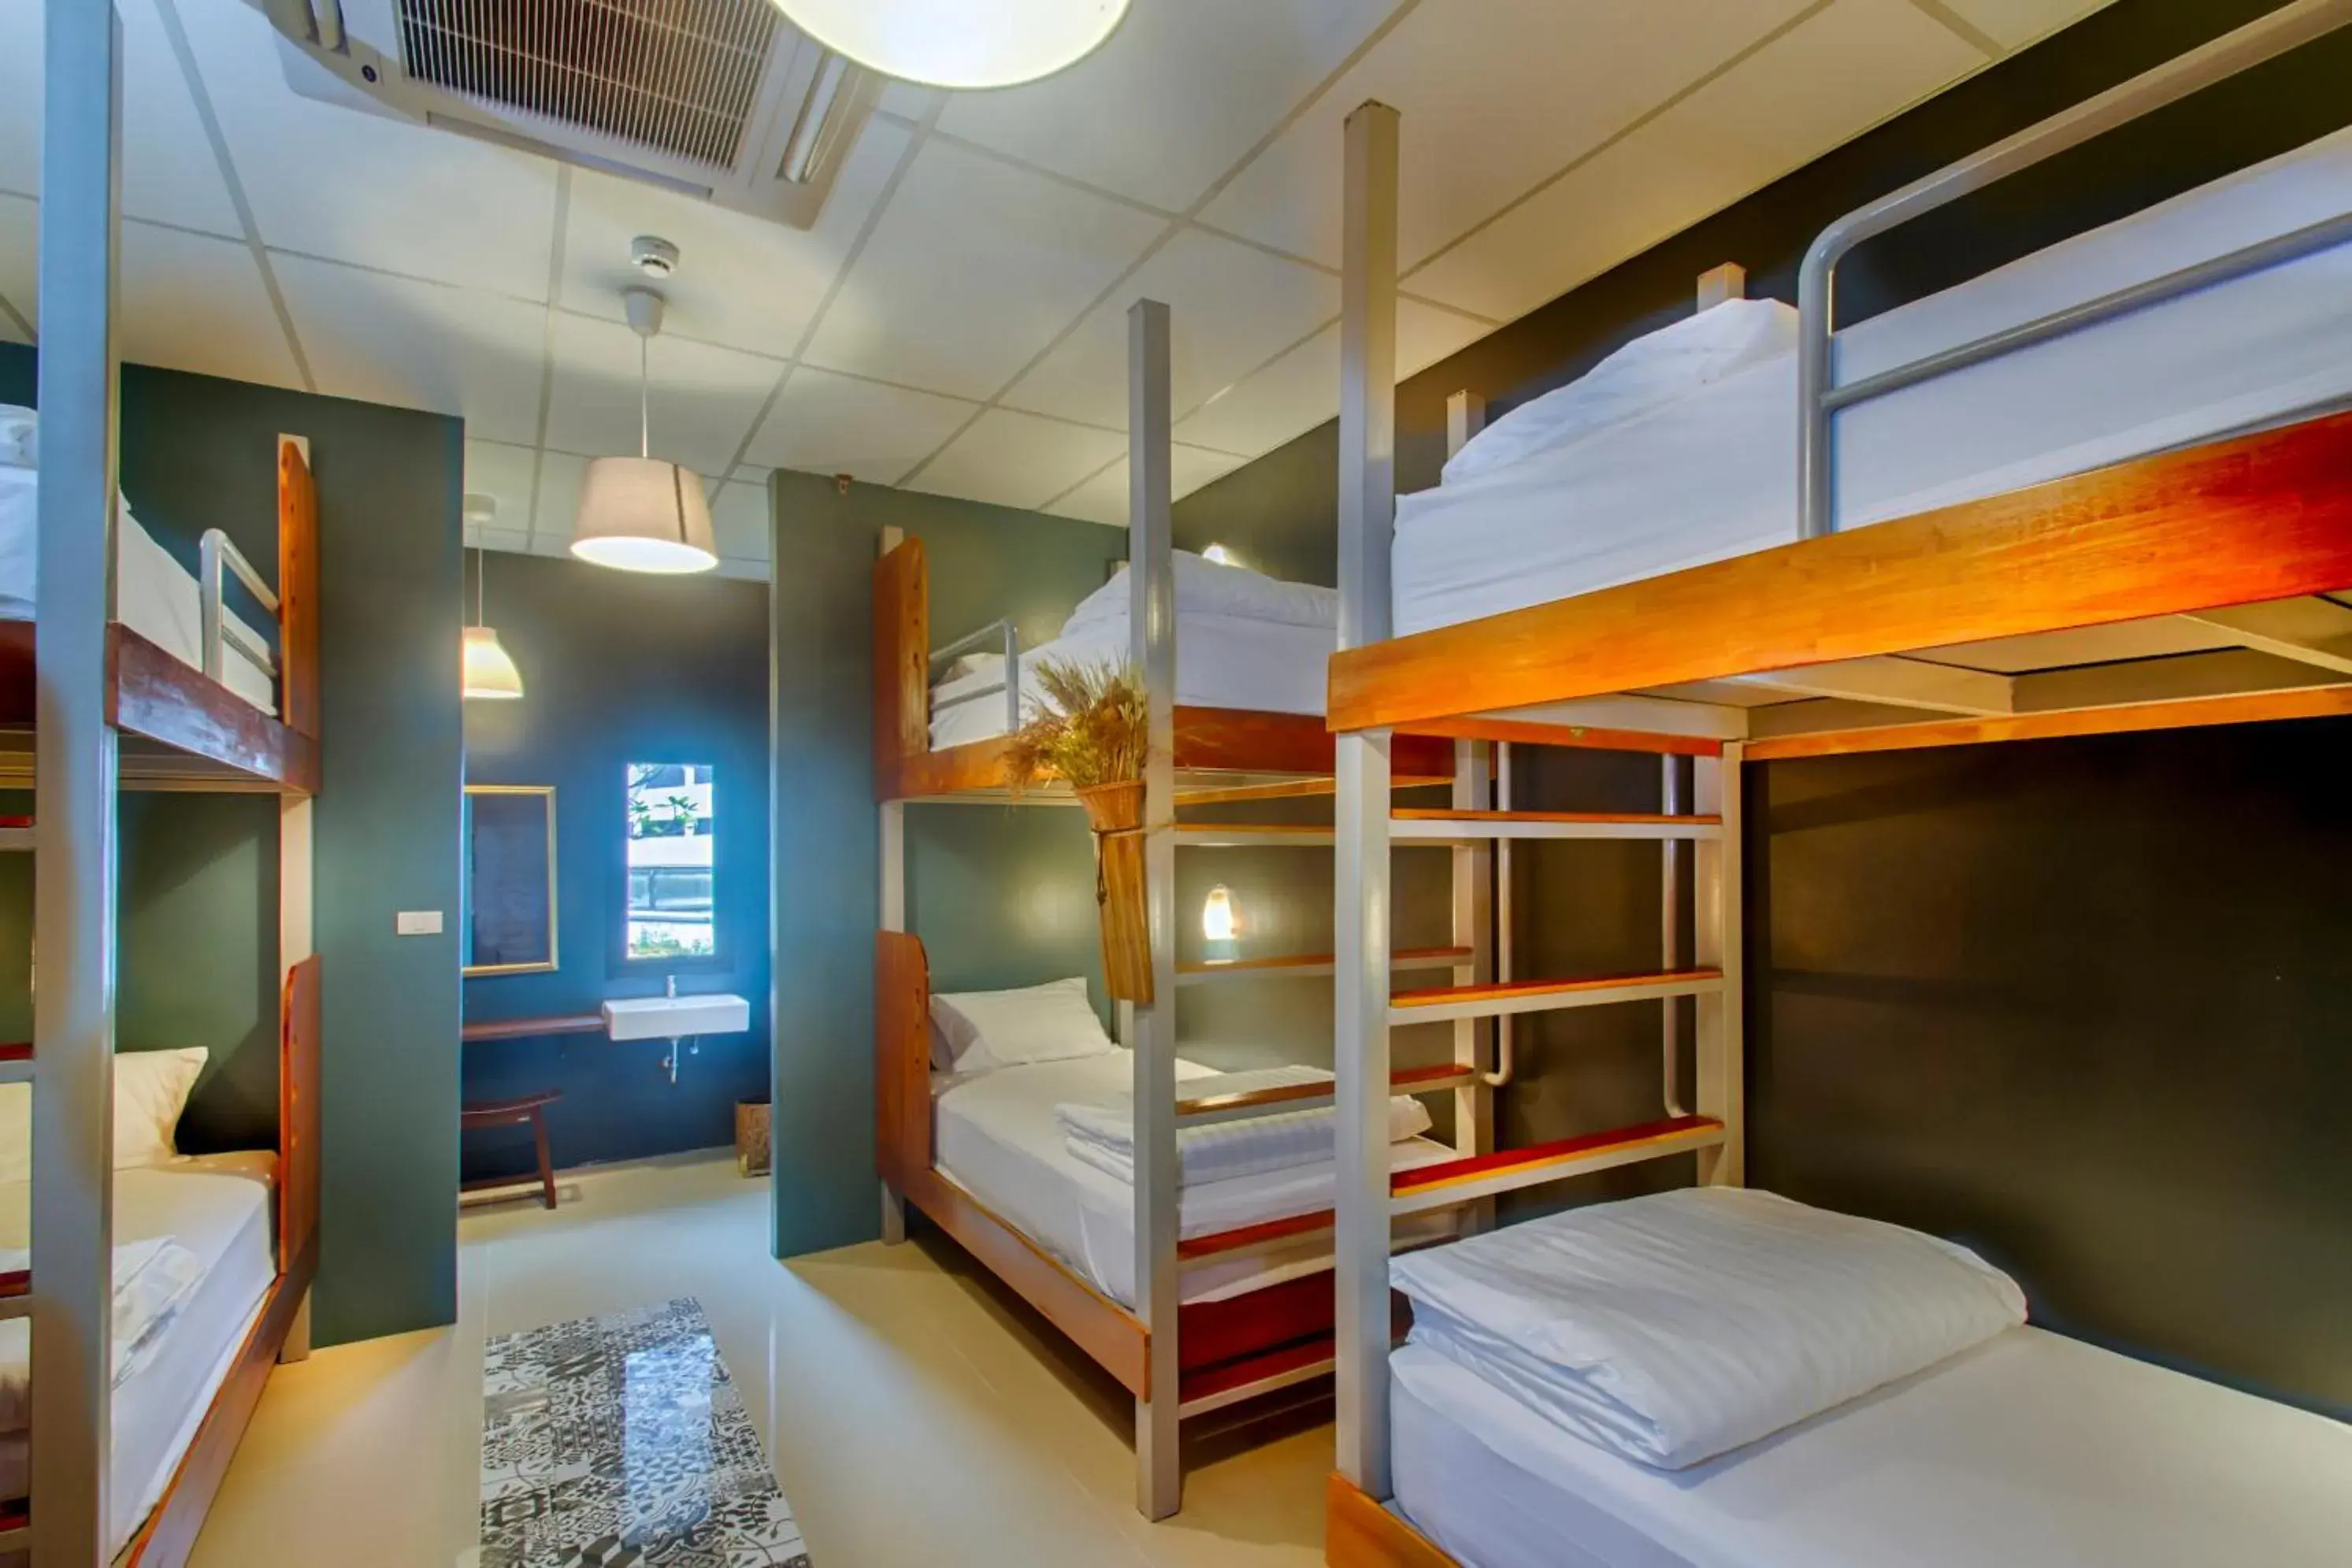 Bunk Bed in Hom hostel & Cooking club